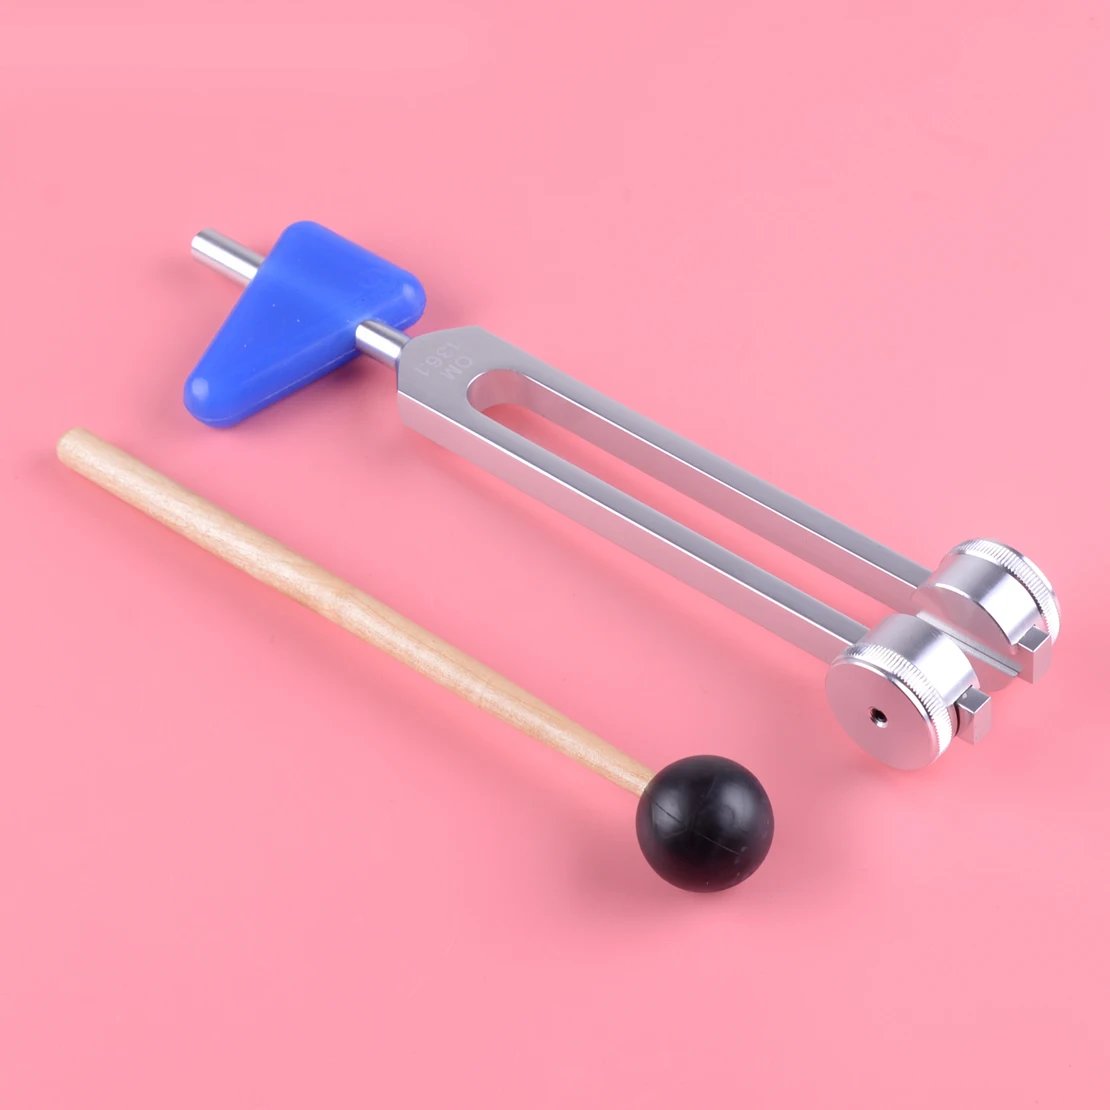 

LETAOSK New Tuning Fork Chakra Hammer Ball Diagnostic Healing Tool OM136.1Hz